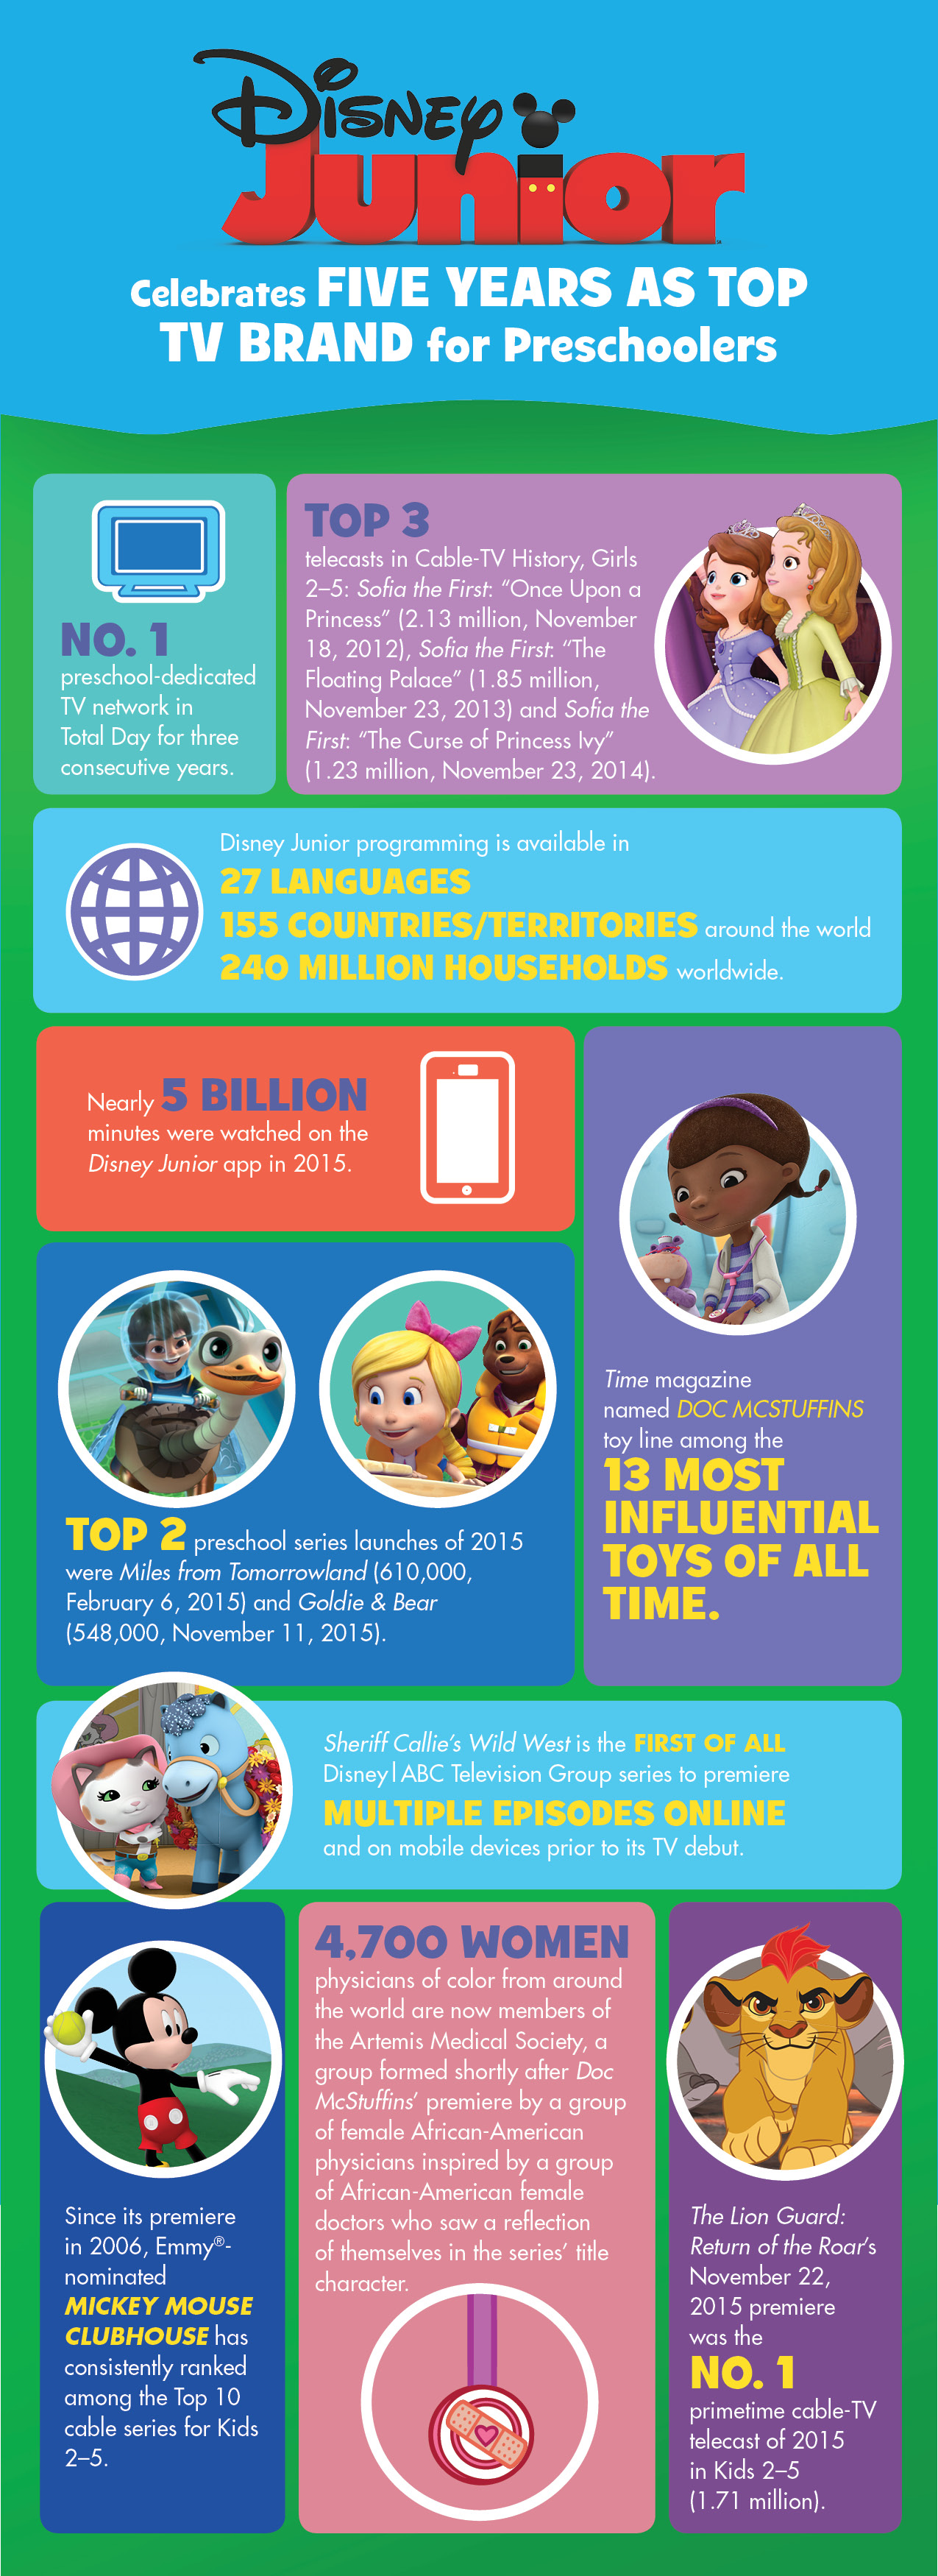 Disney Junior Celebrates Five Years as Top TV Brand for Preschoolers